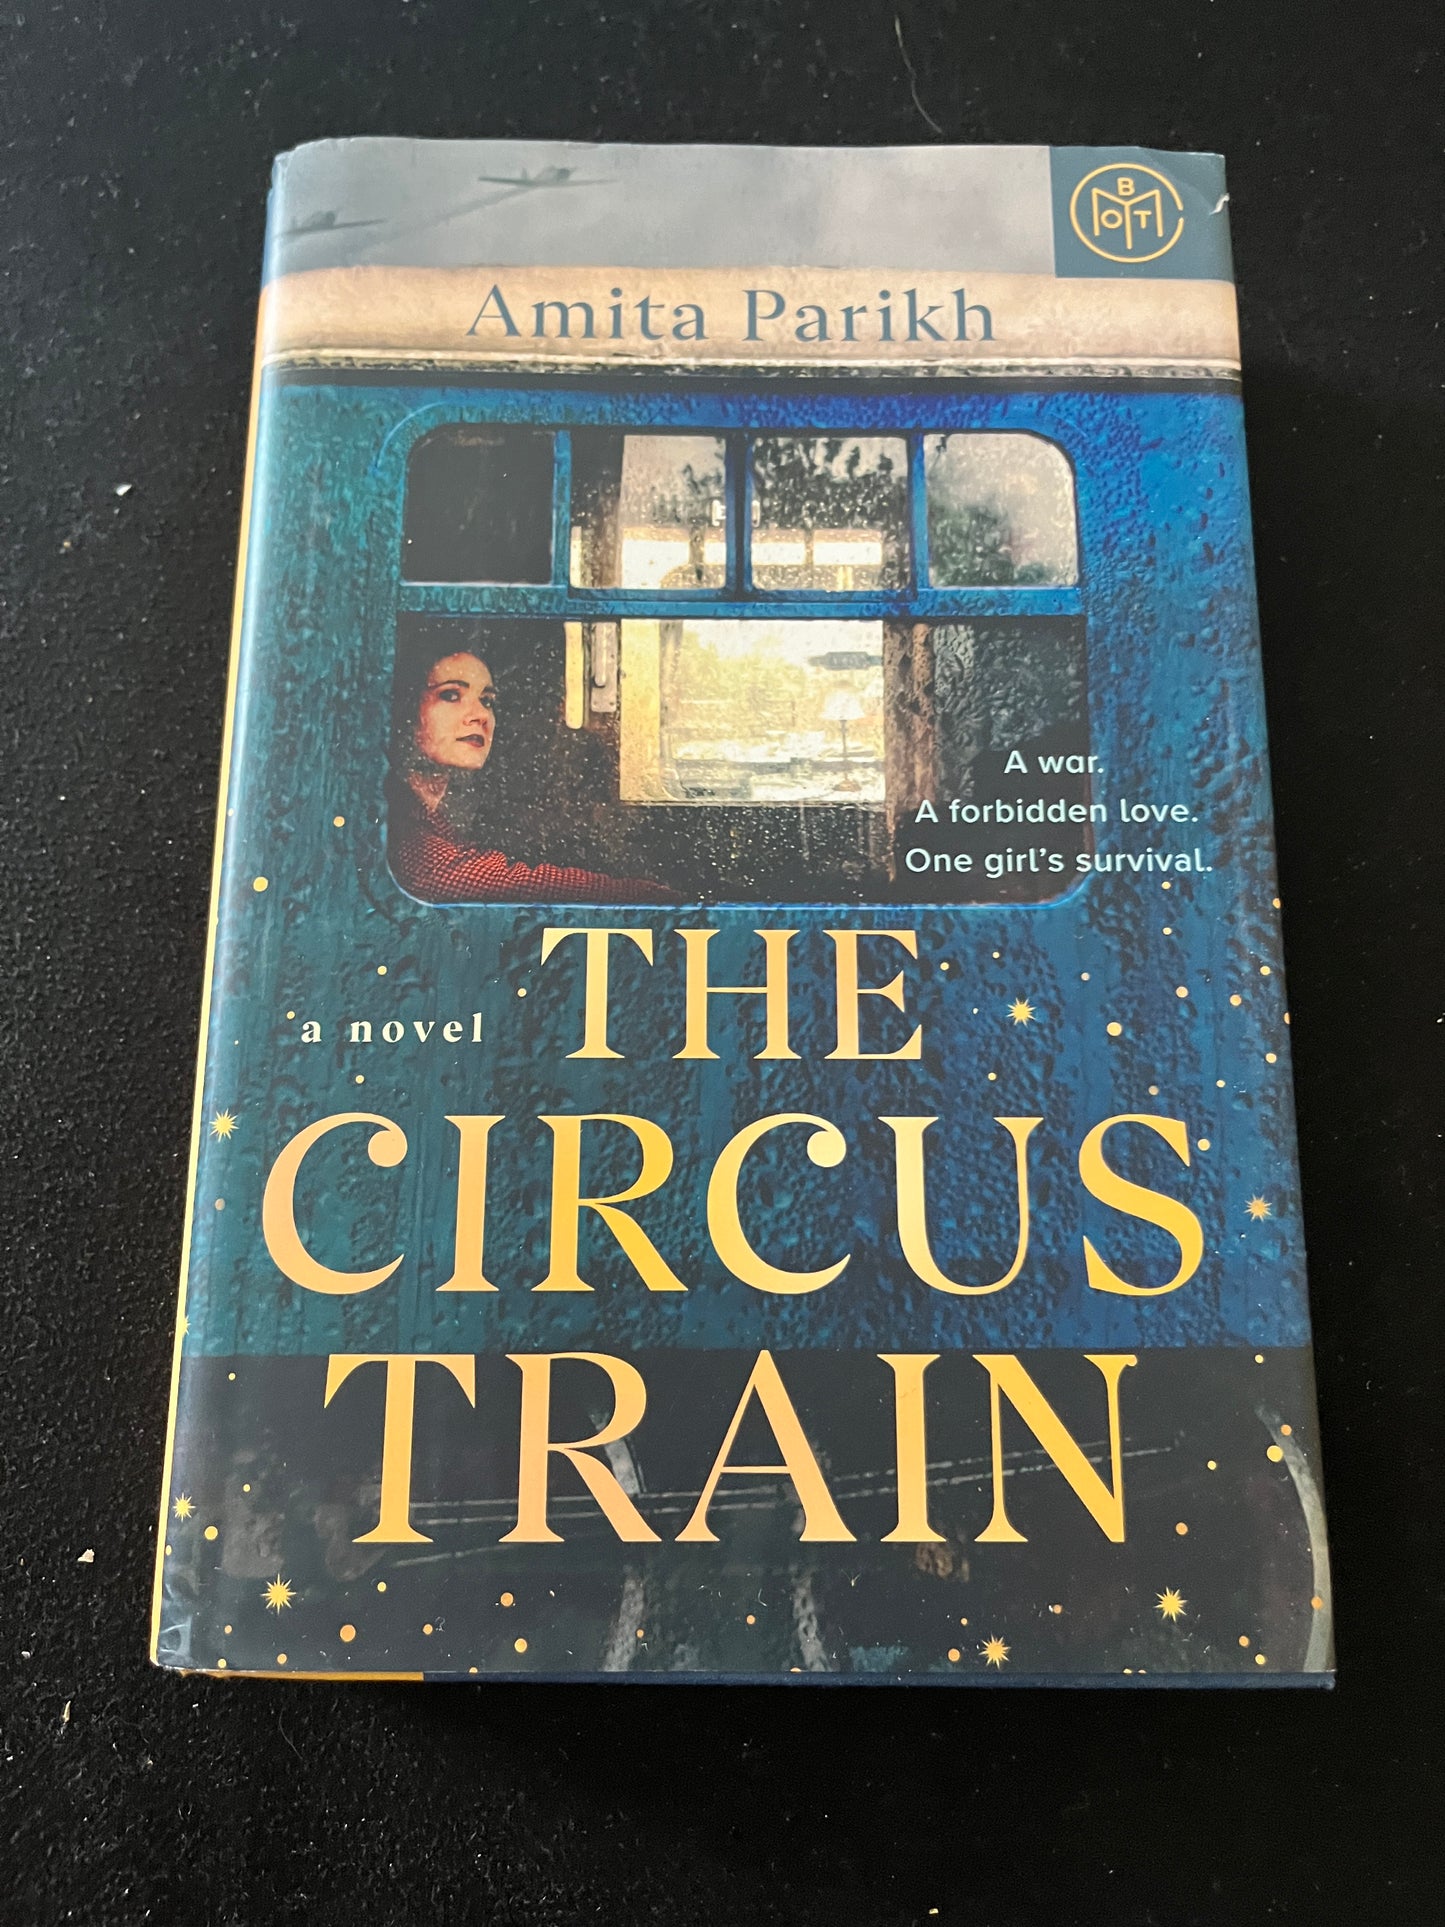 THE CIRCUS TRAIN by Amita Parikh